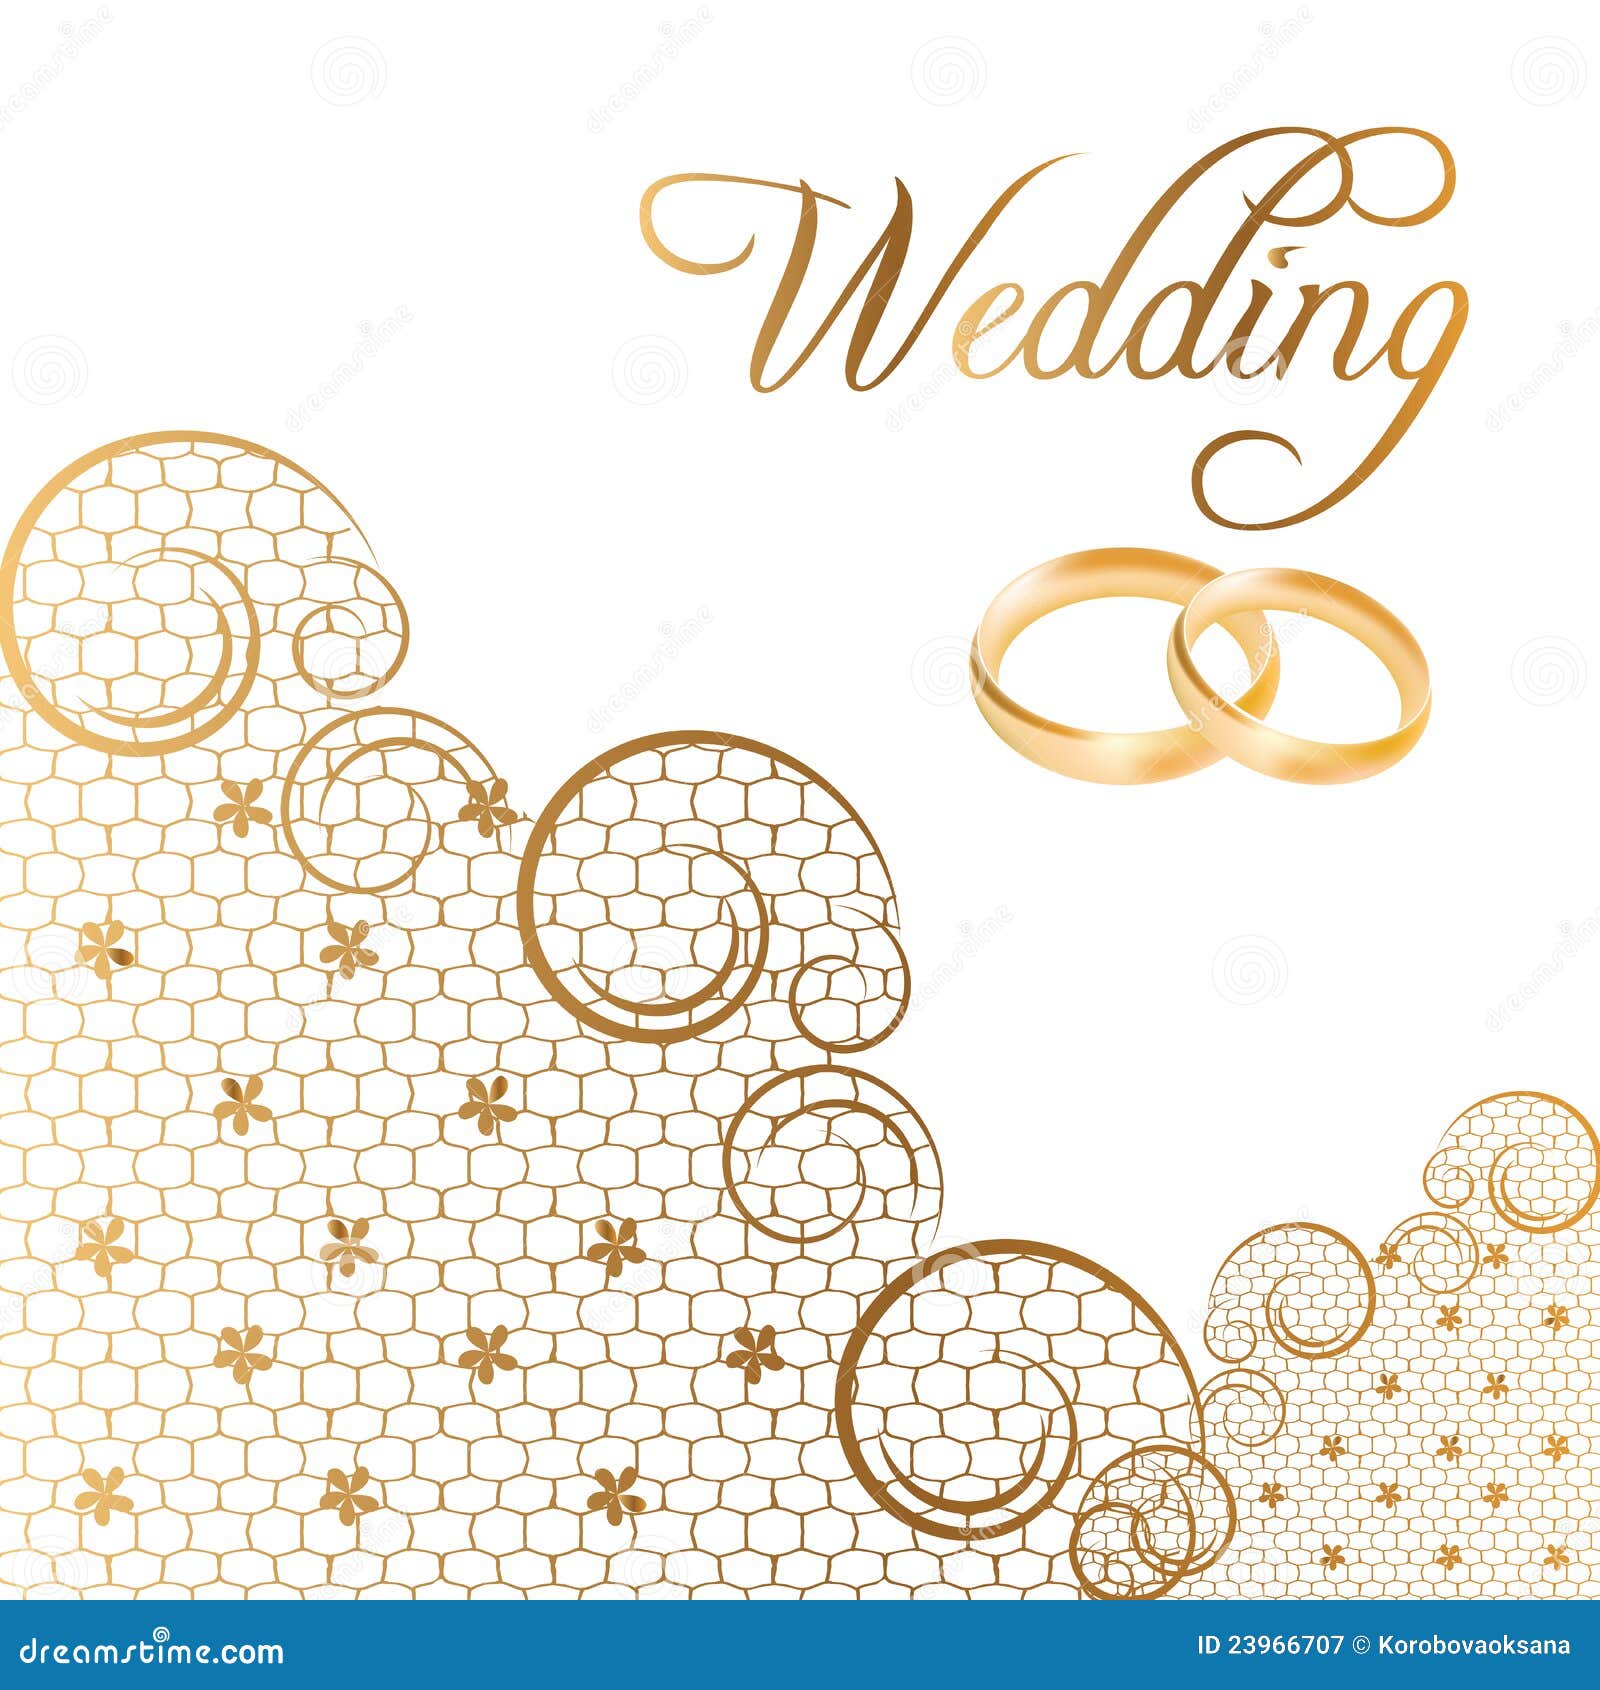 Vector Wedding Cards stock vector. Illustration of pattern - 23966707